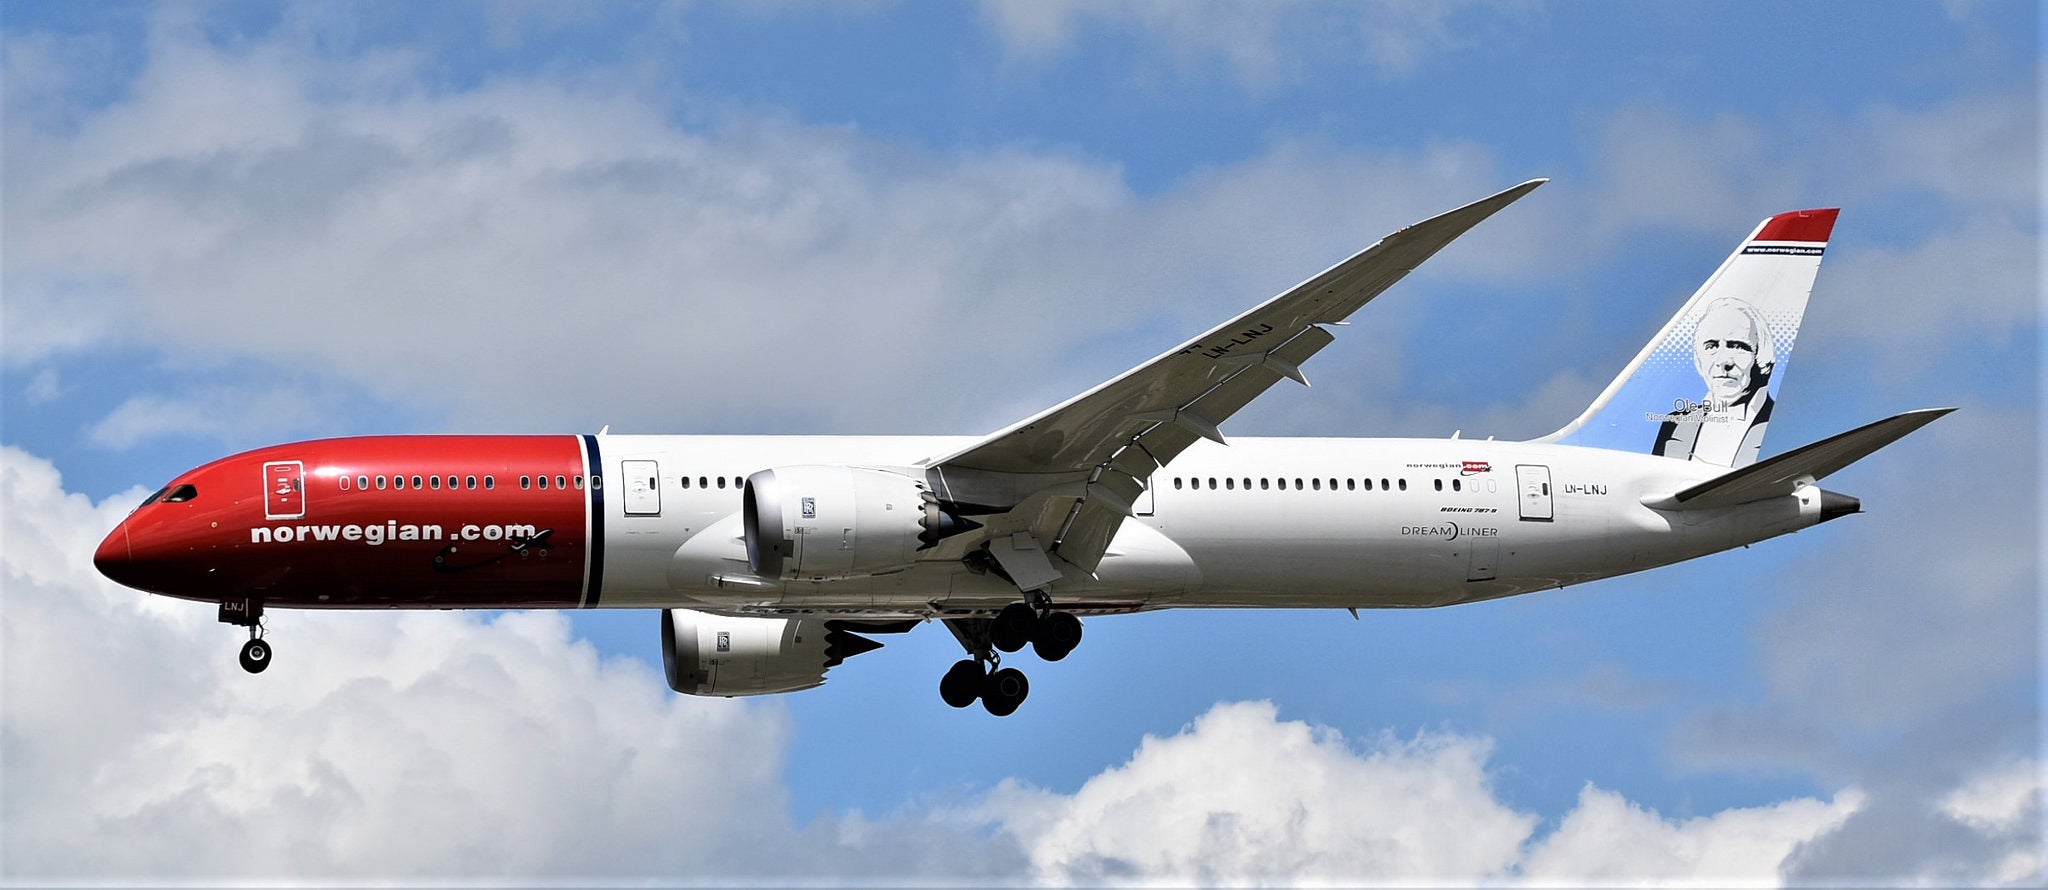 Norwegian 787-9. Photo by Alec Wilson/Flickr.